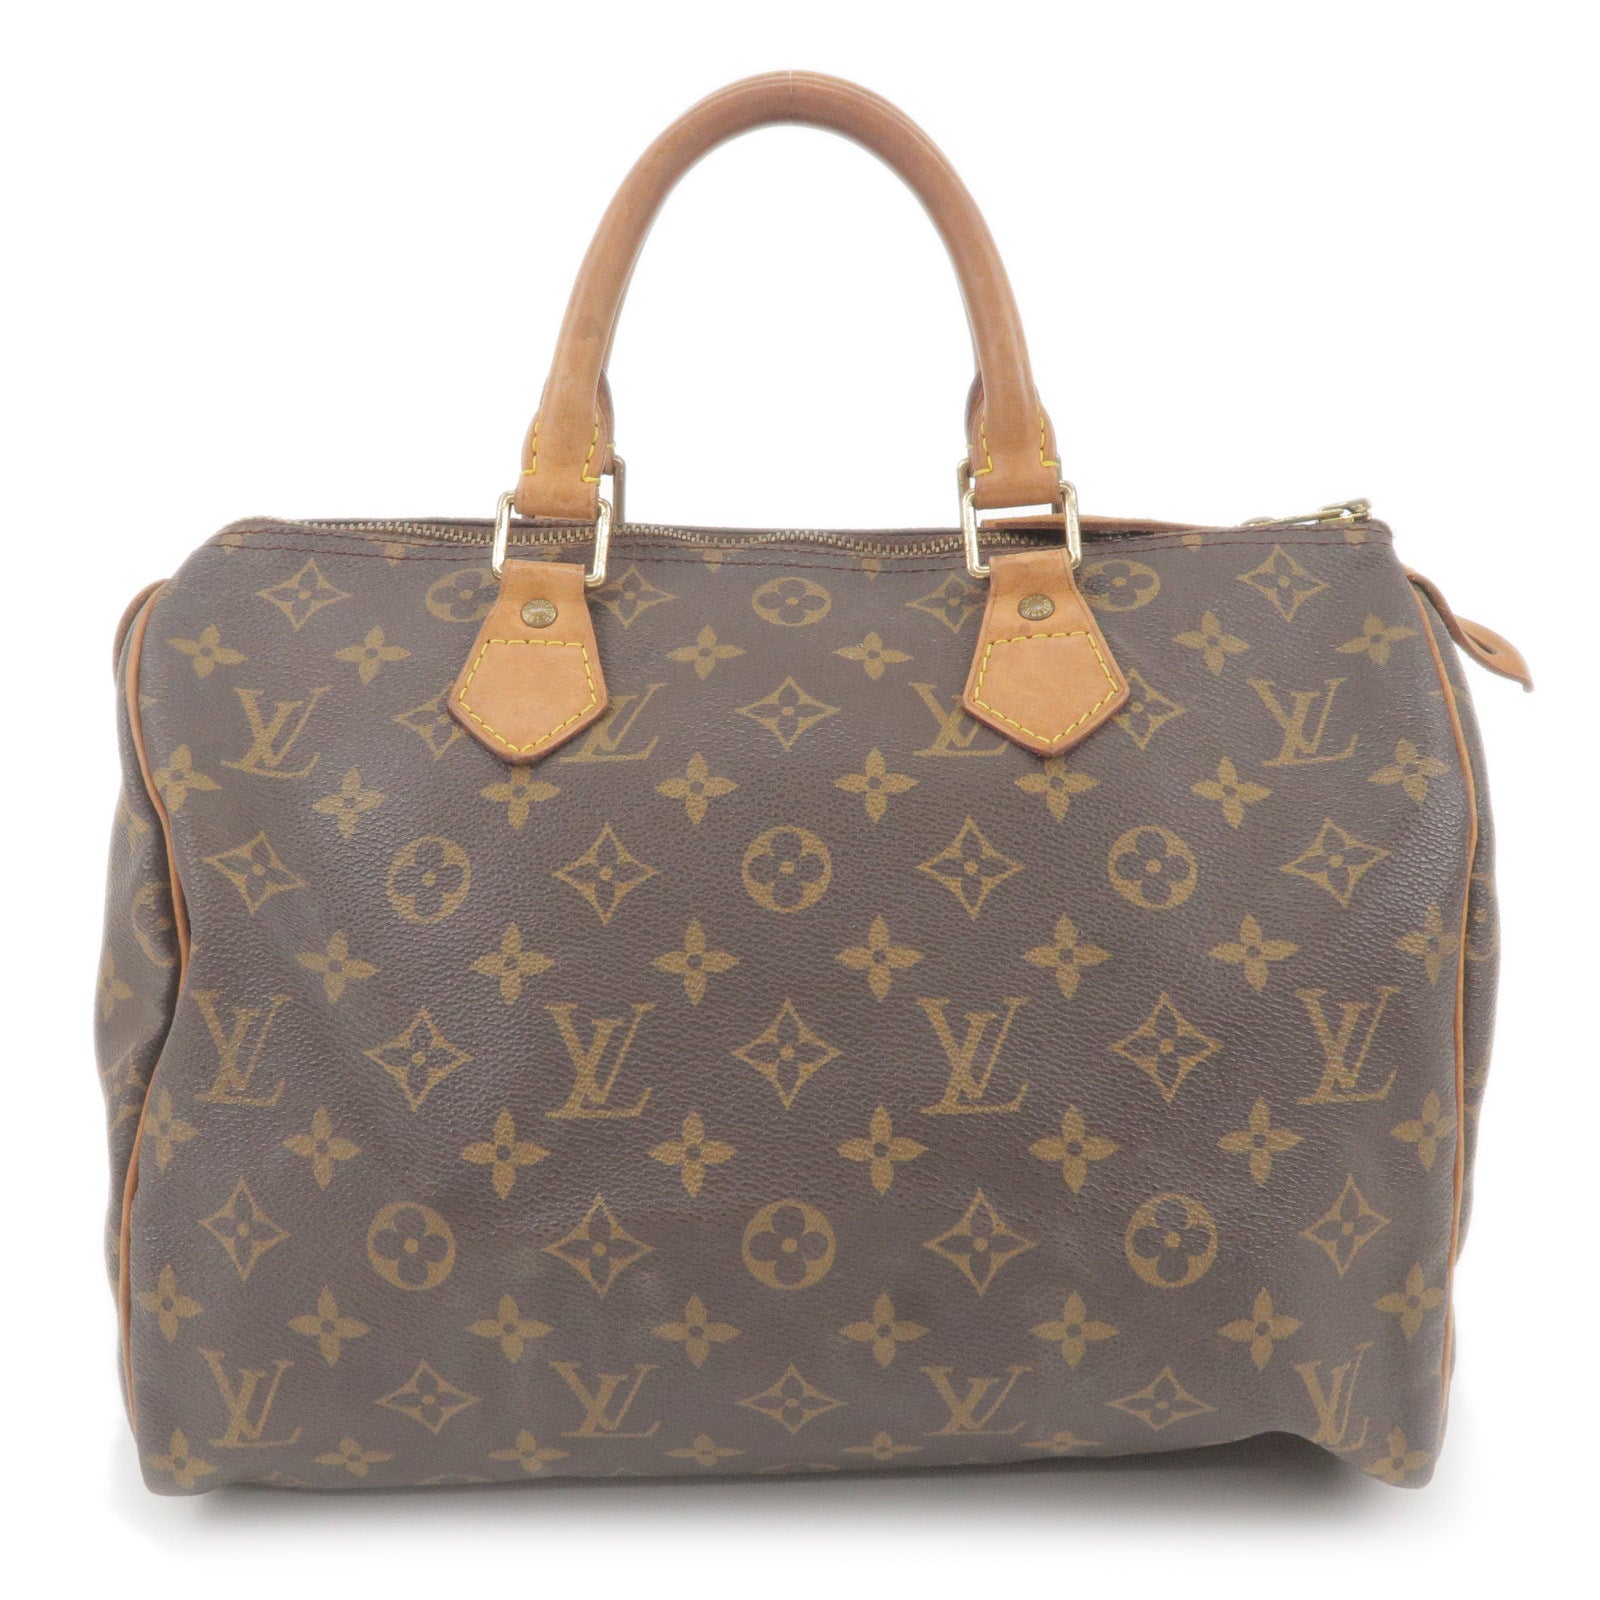 Louis Vuitton M41526 Speedy 30 Monogram Bag